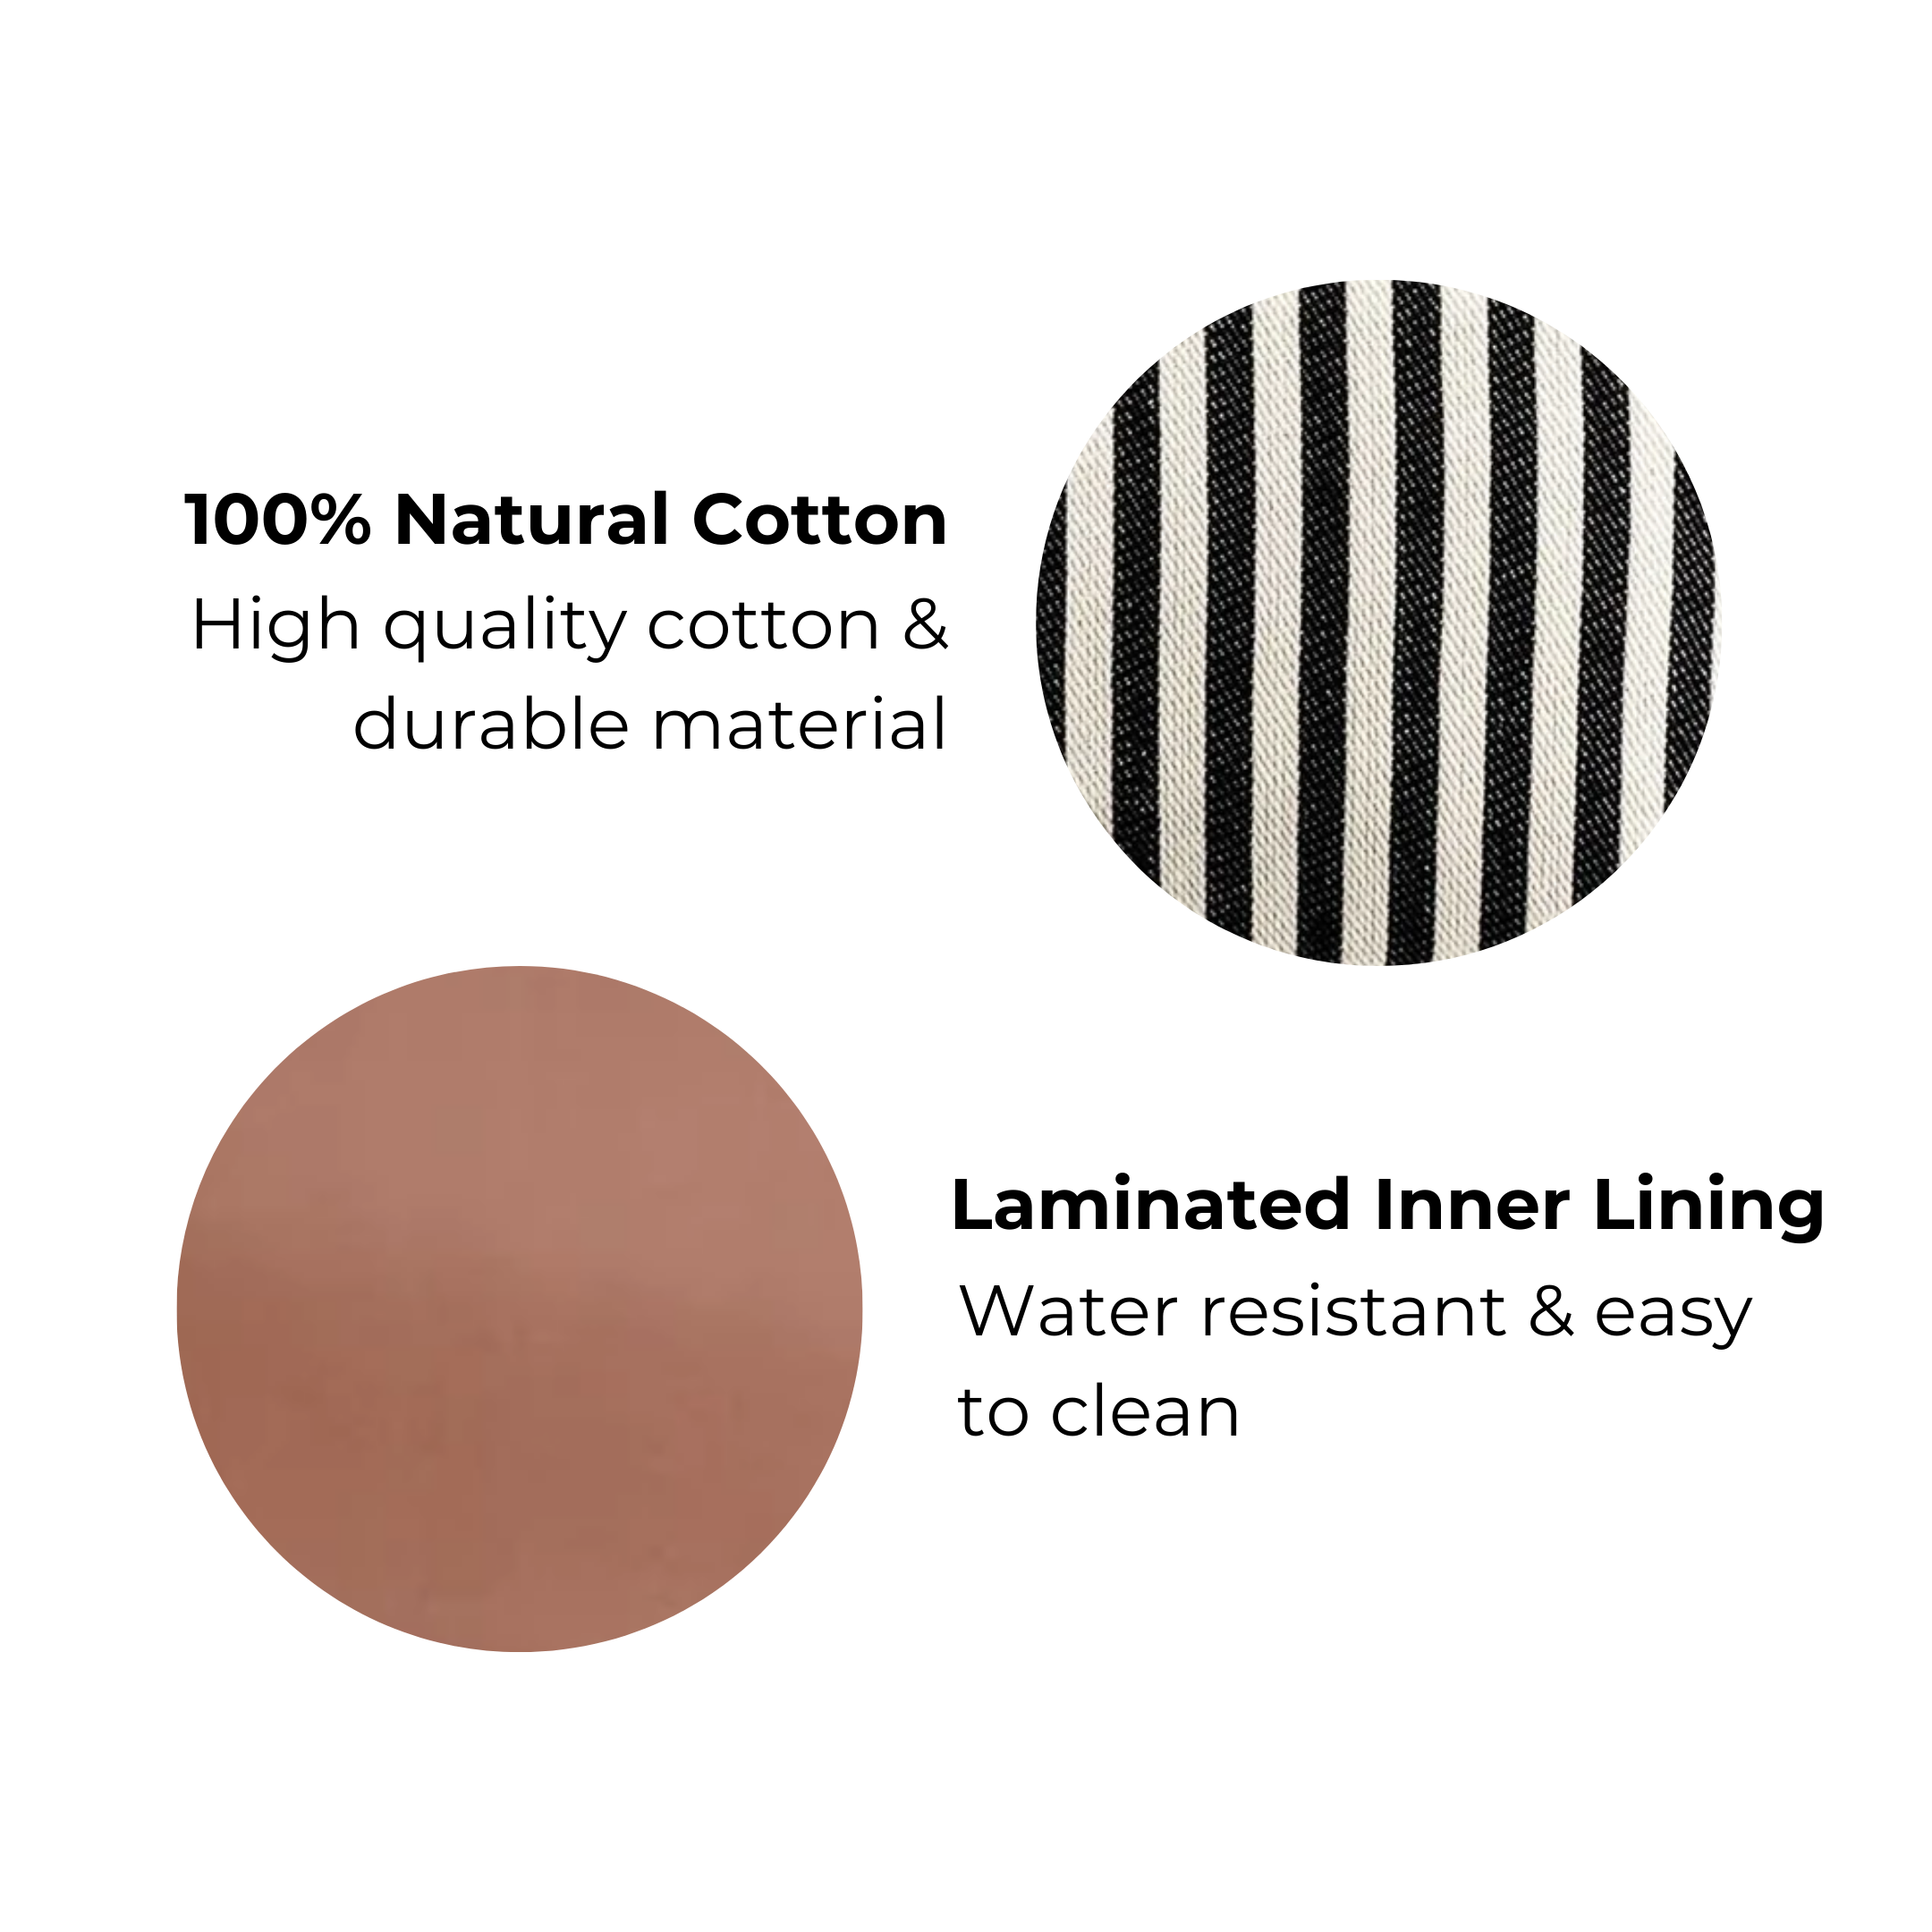 Medium Box Makeup & Toiletry, Striped | Bag-all